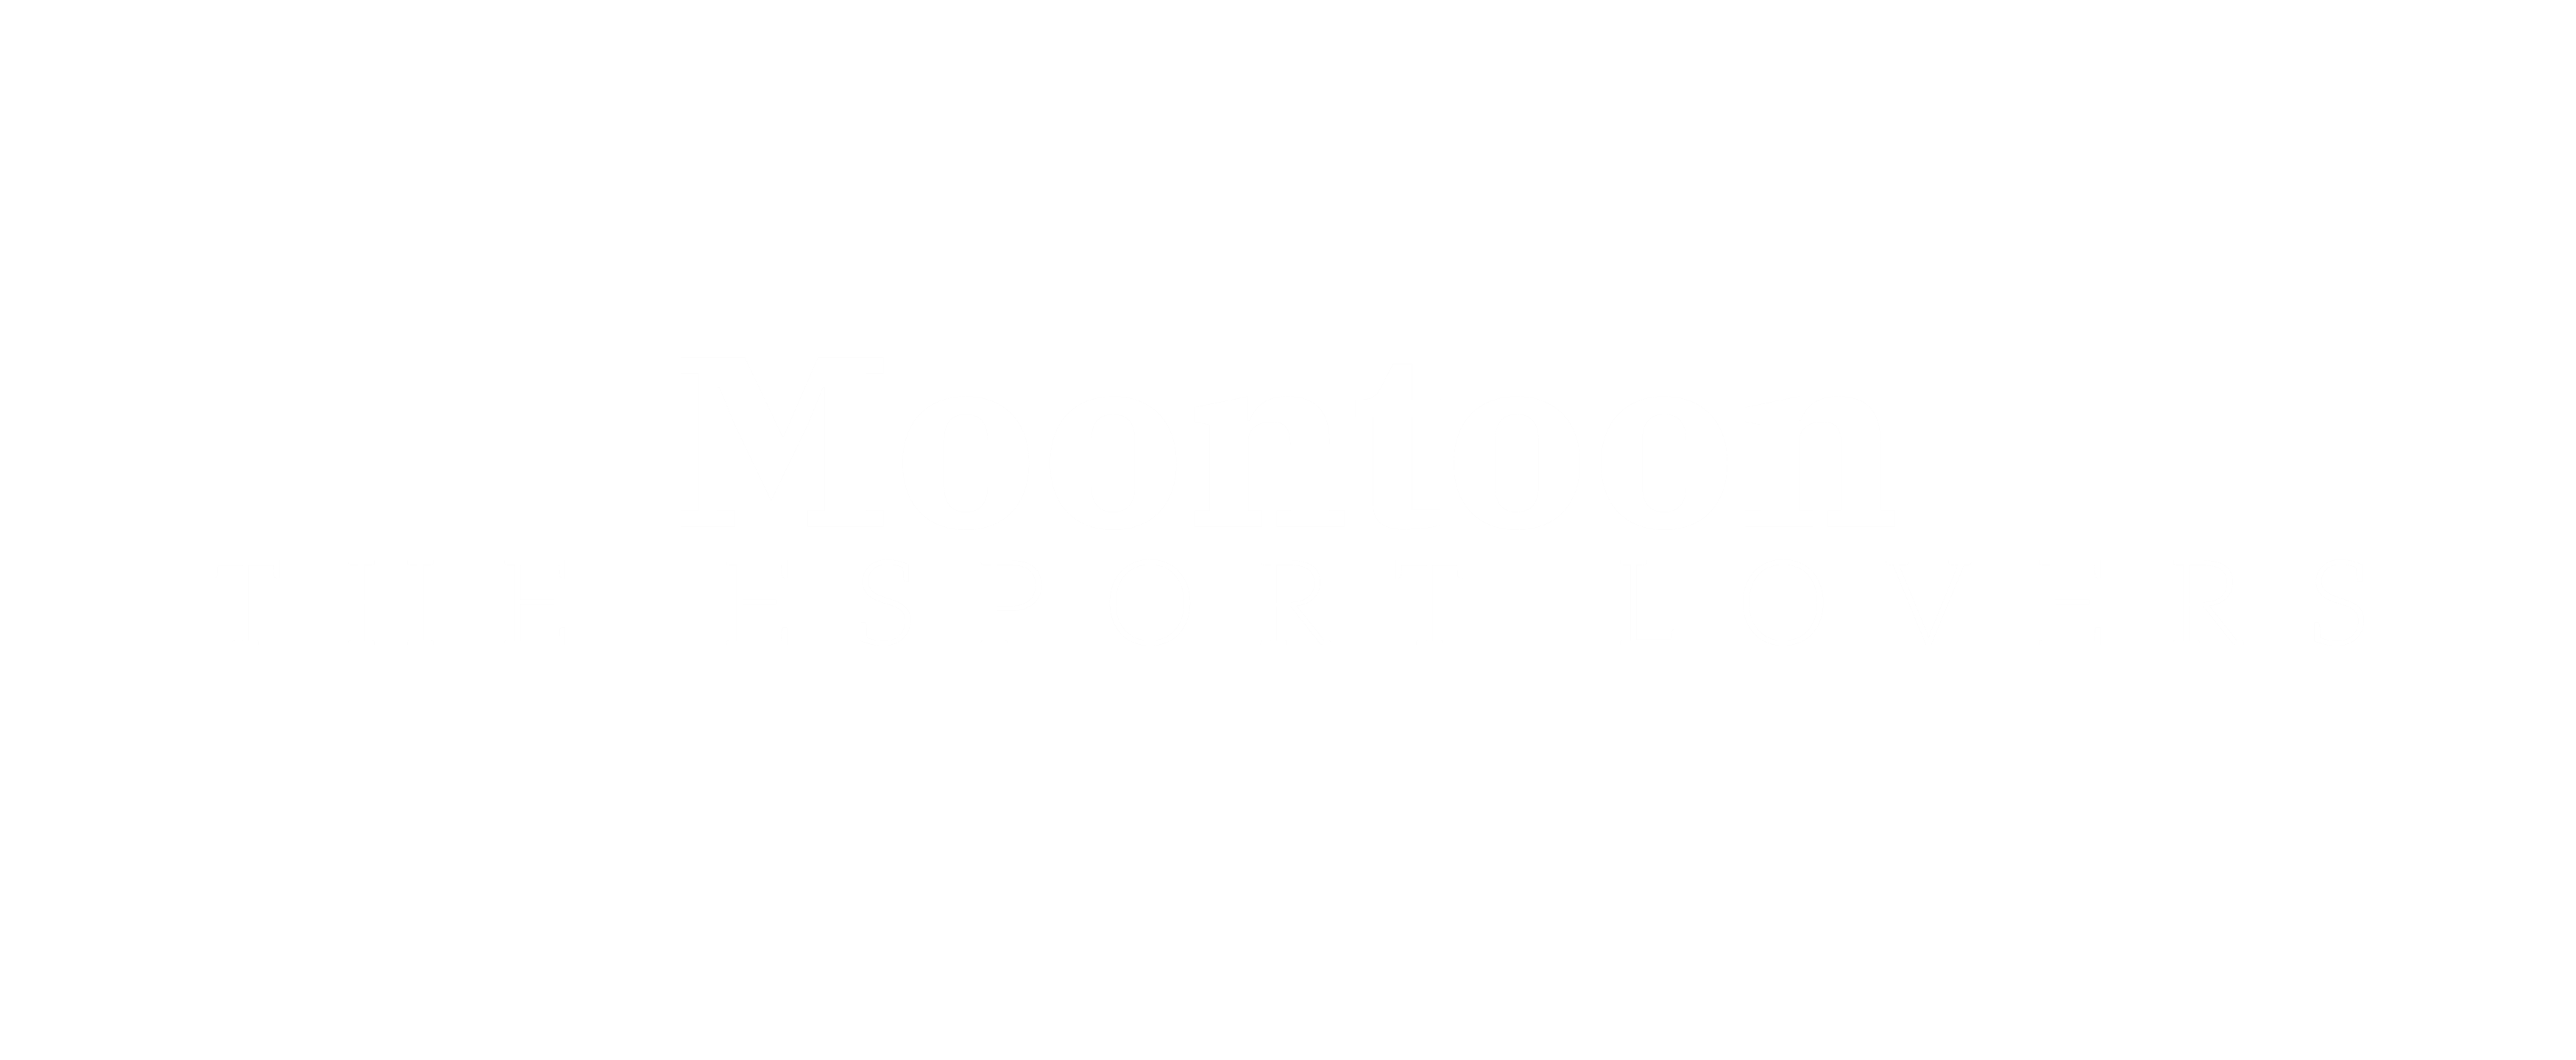 Moontoon